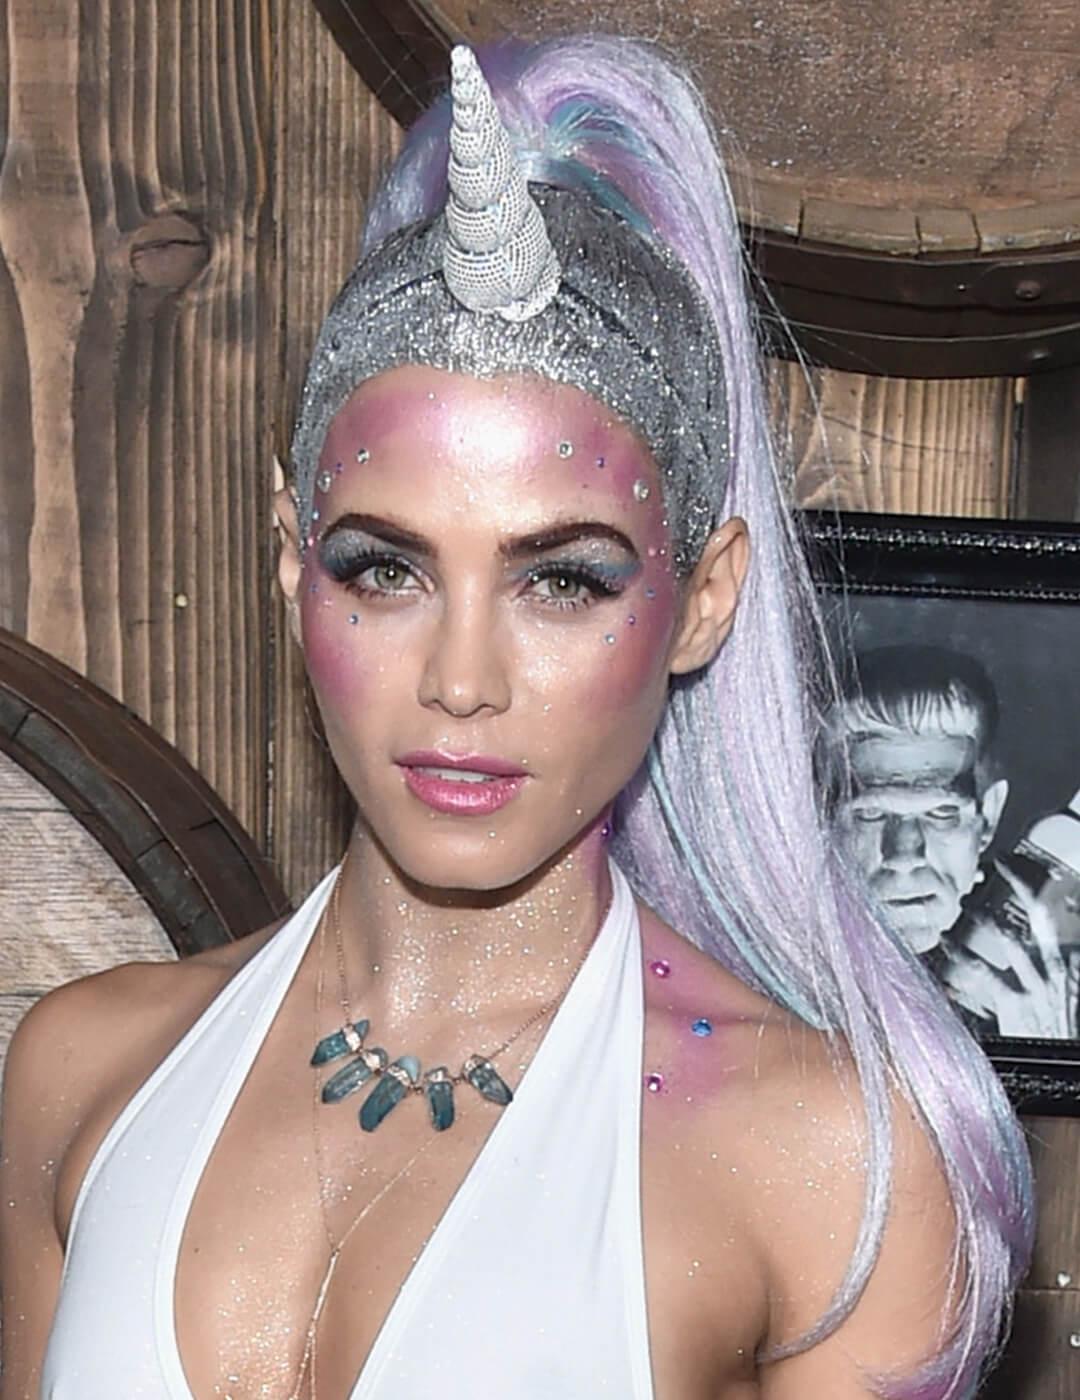 Jenna Dewan Tatum dressed up as a cosmic unicorn for Halloween